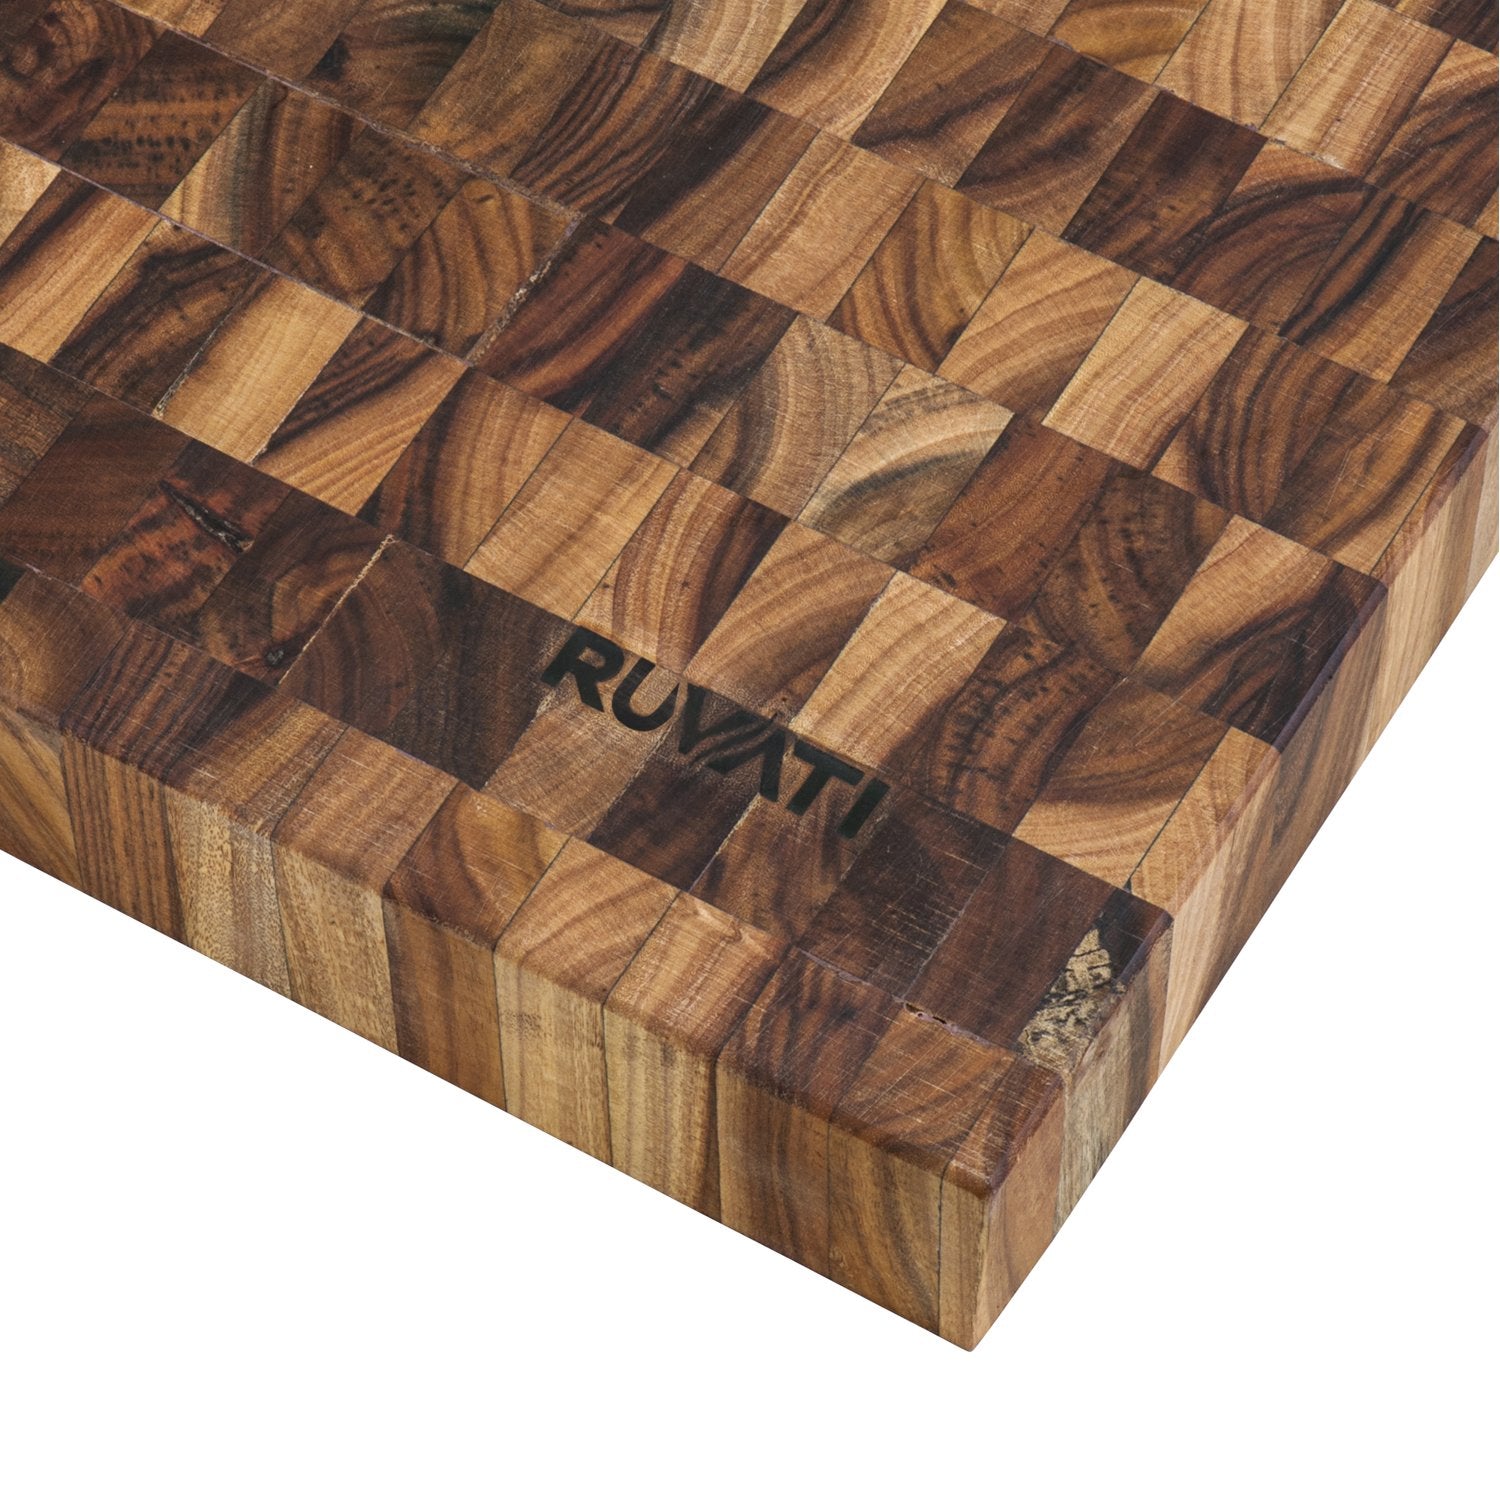  End Grain Wood cutting board - Wood Chopping block